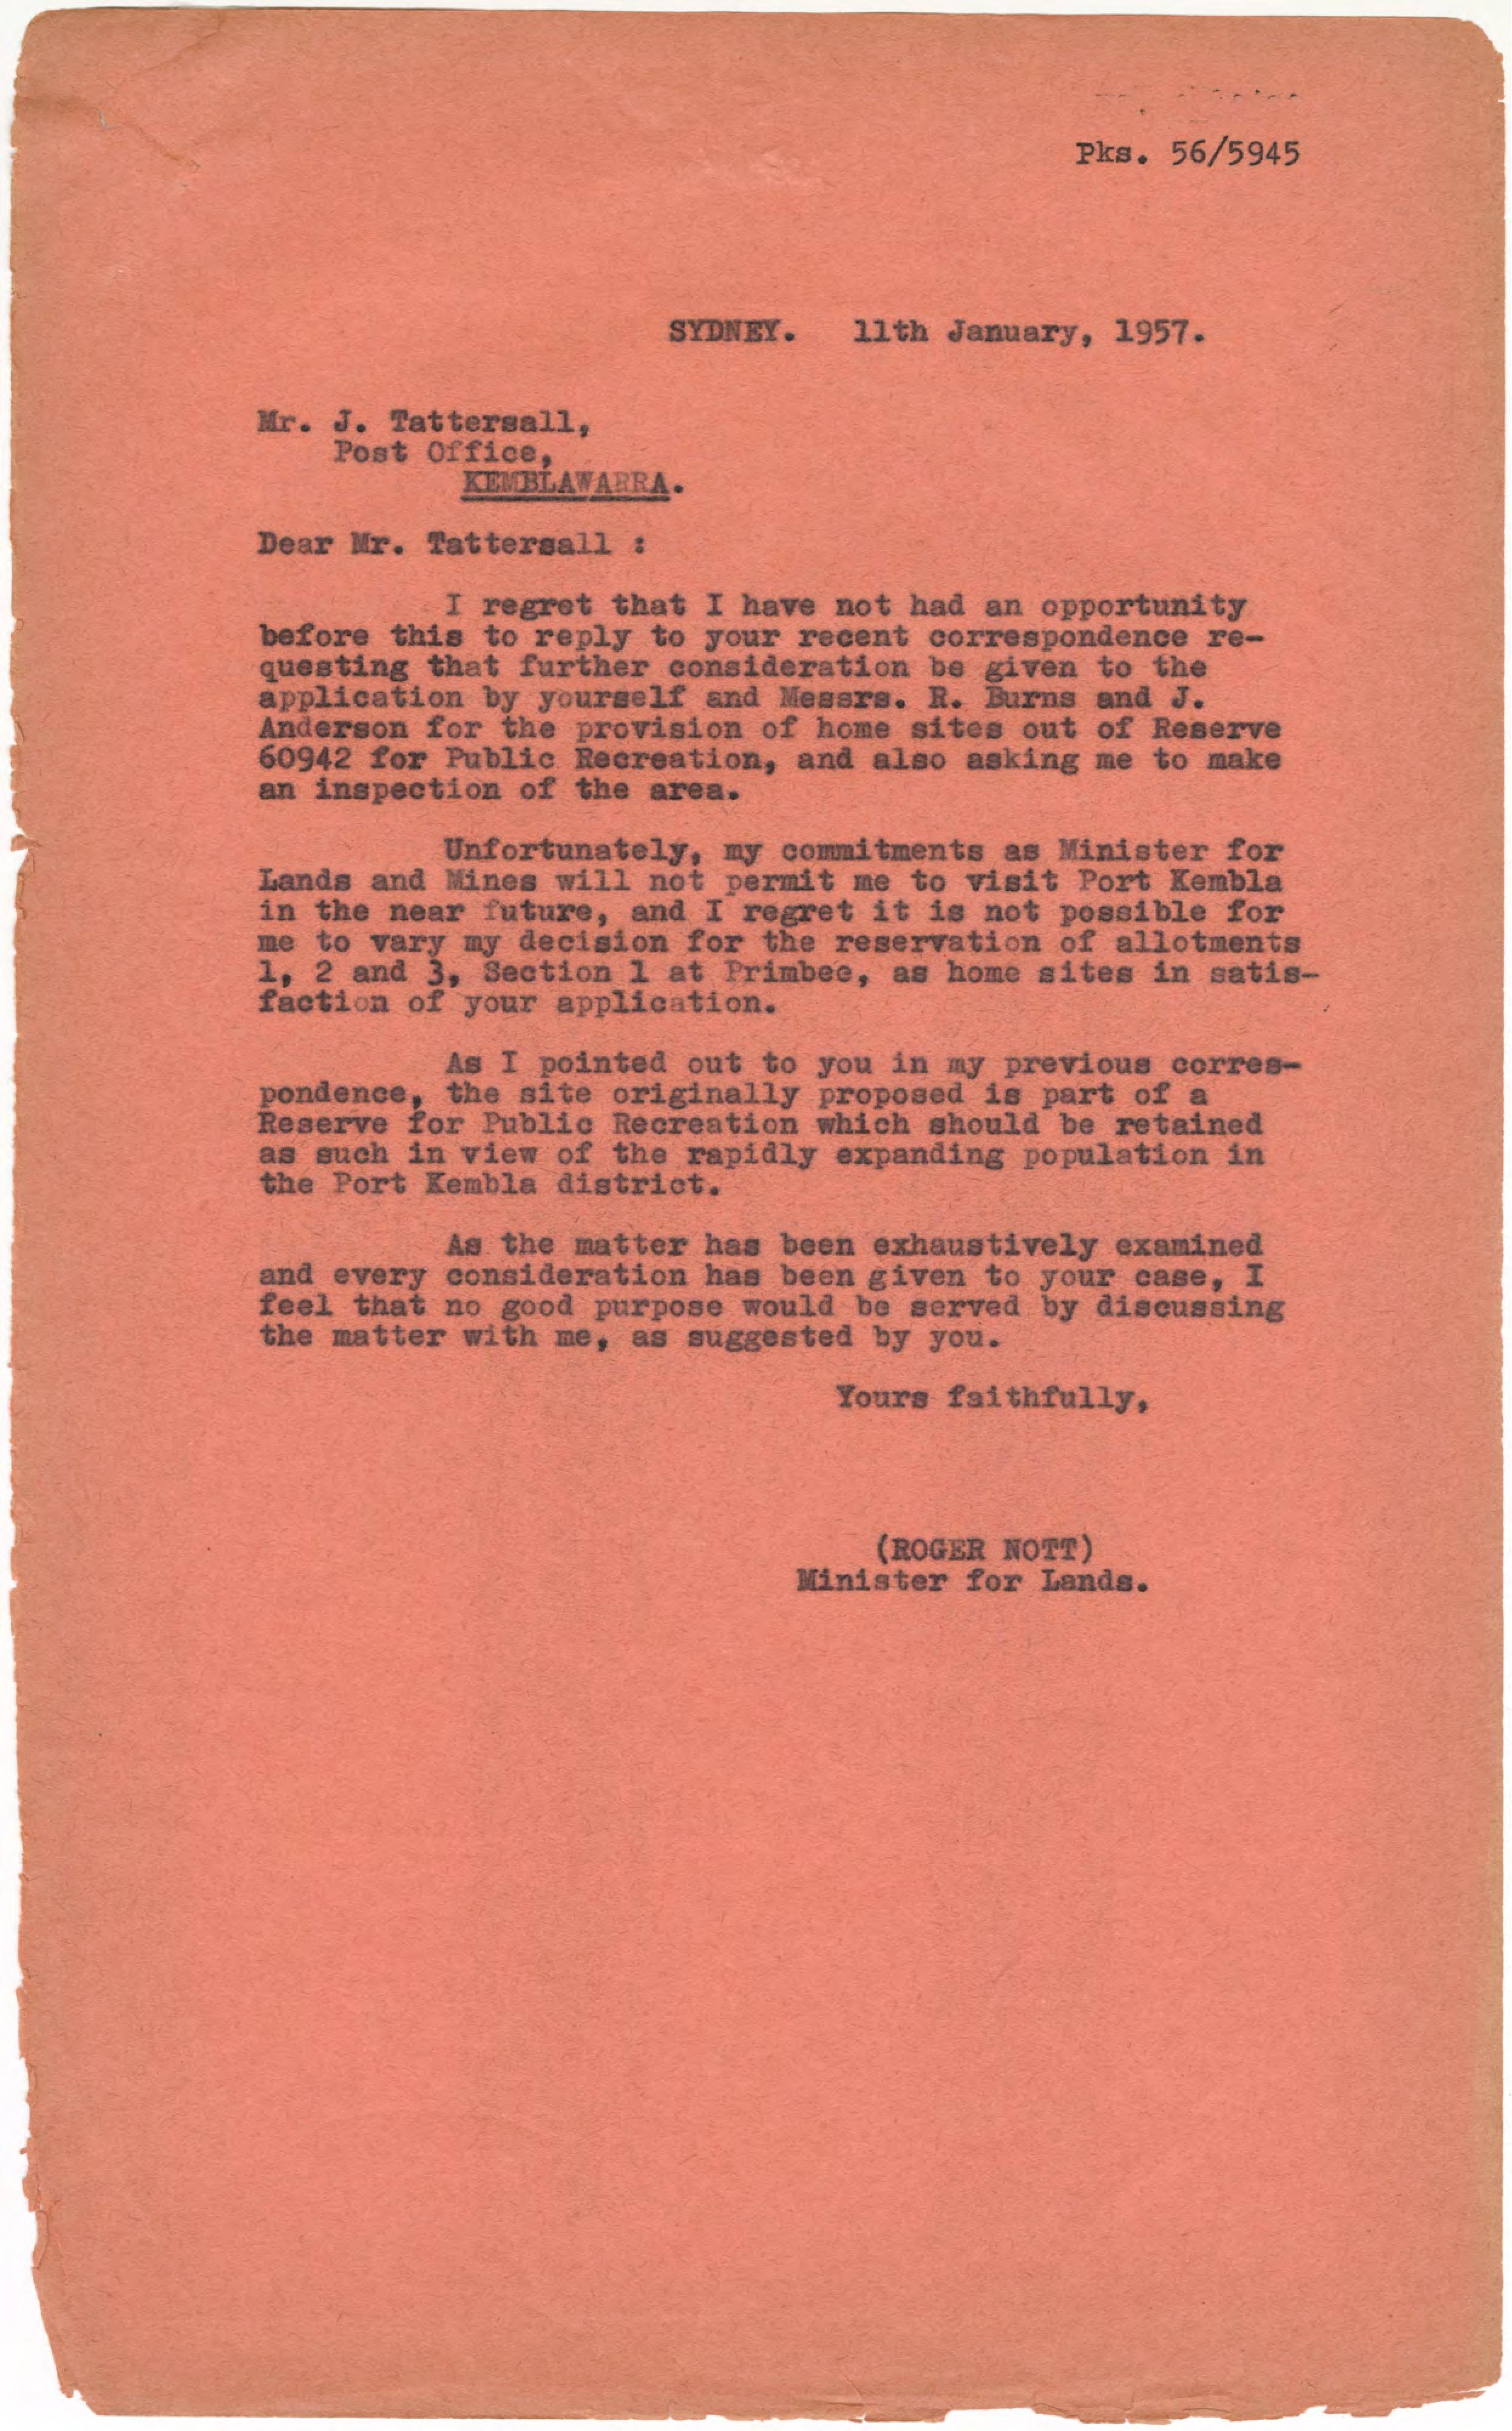 Response letter from Mr Roger Nott, NSW Minister for Lands, to Jack Tattersall, 11 January 1957